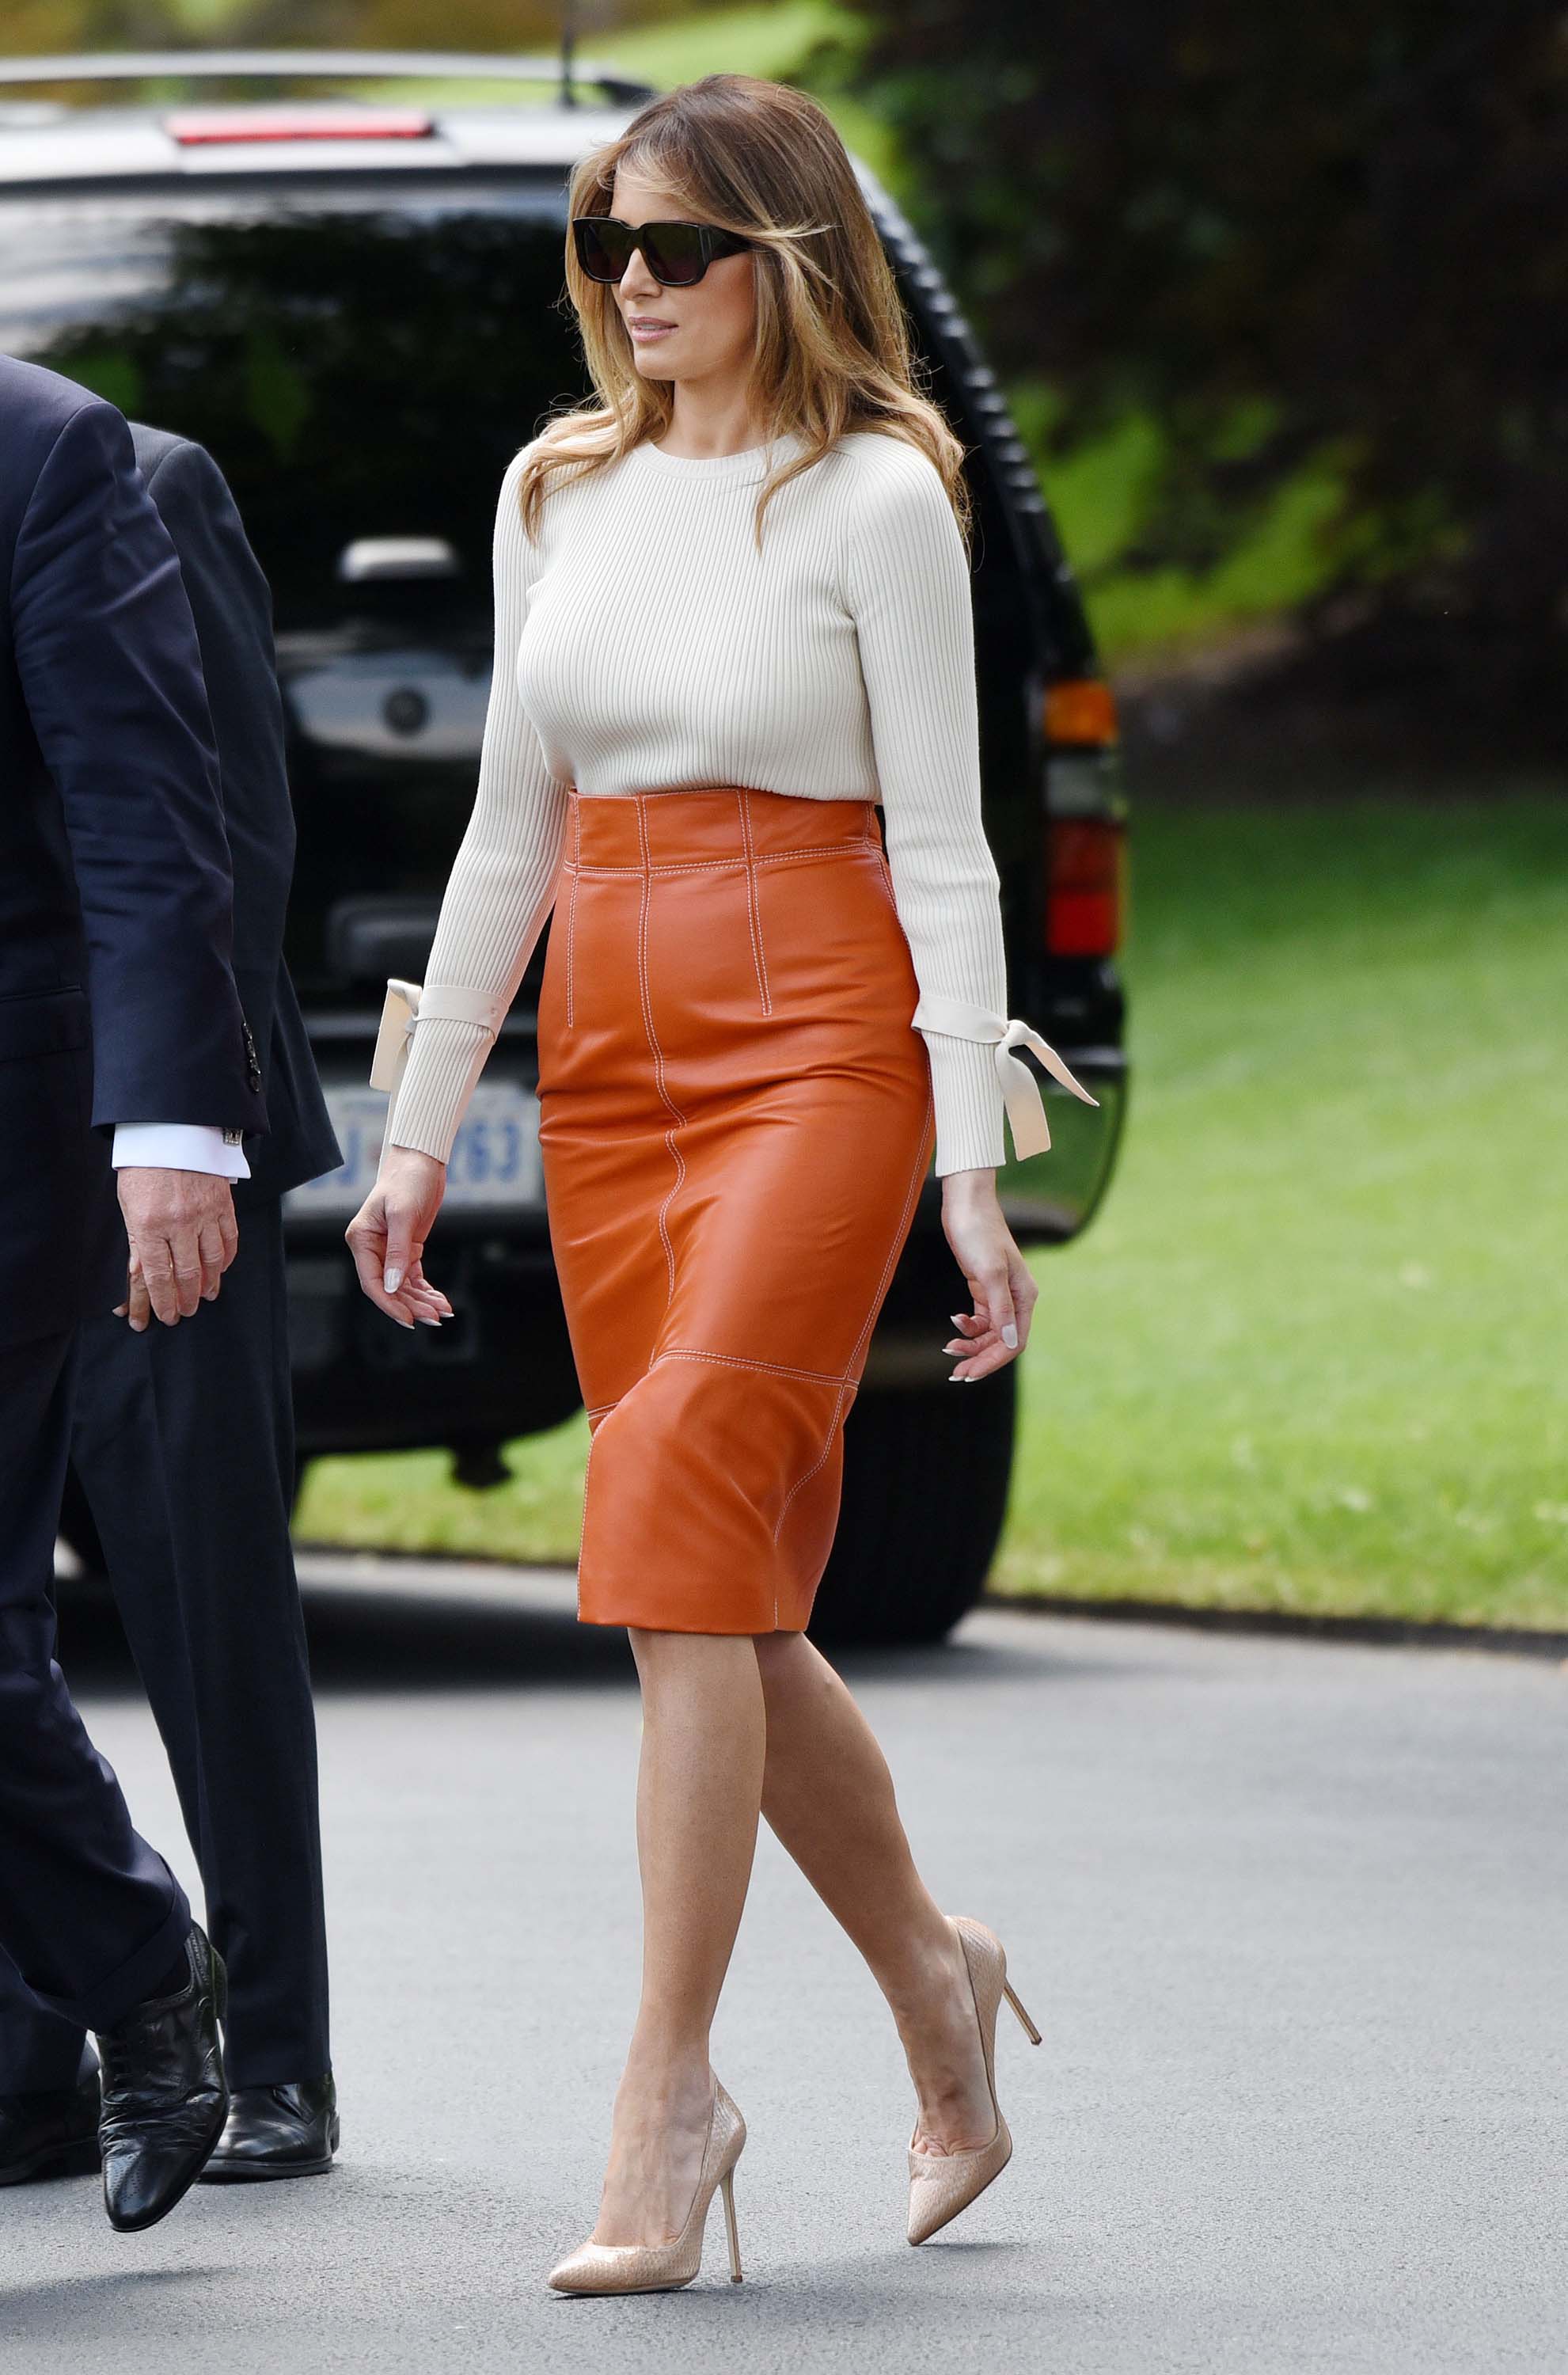 Melania Trump departing the White House